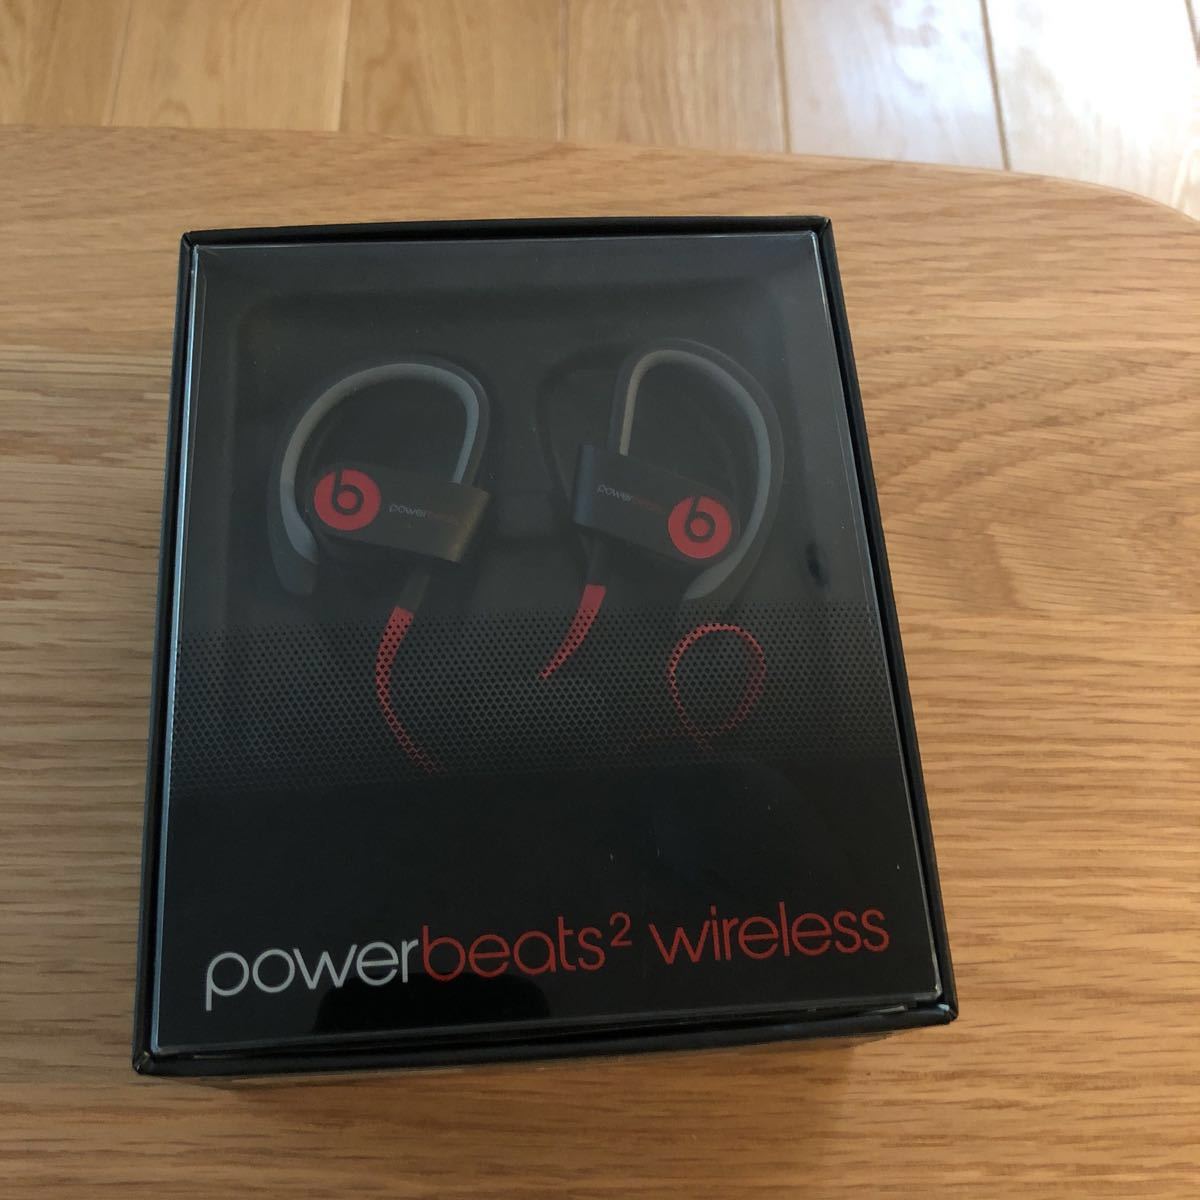 Powerbeats 2無線 原文:Powerbeats 2 wireless